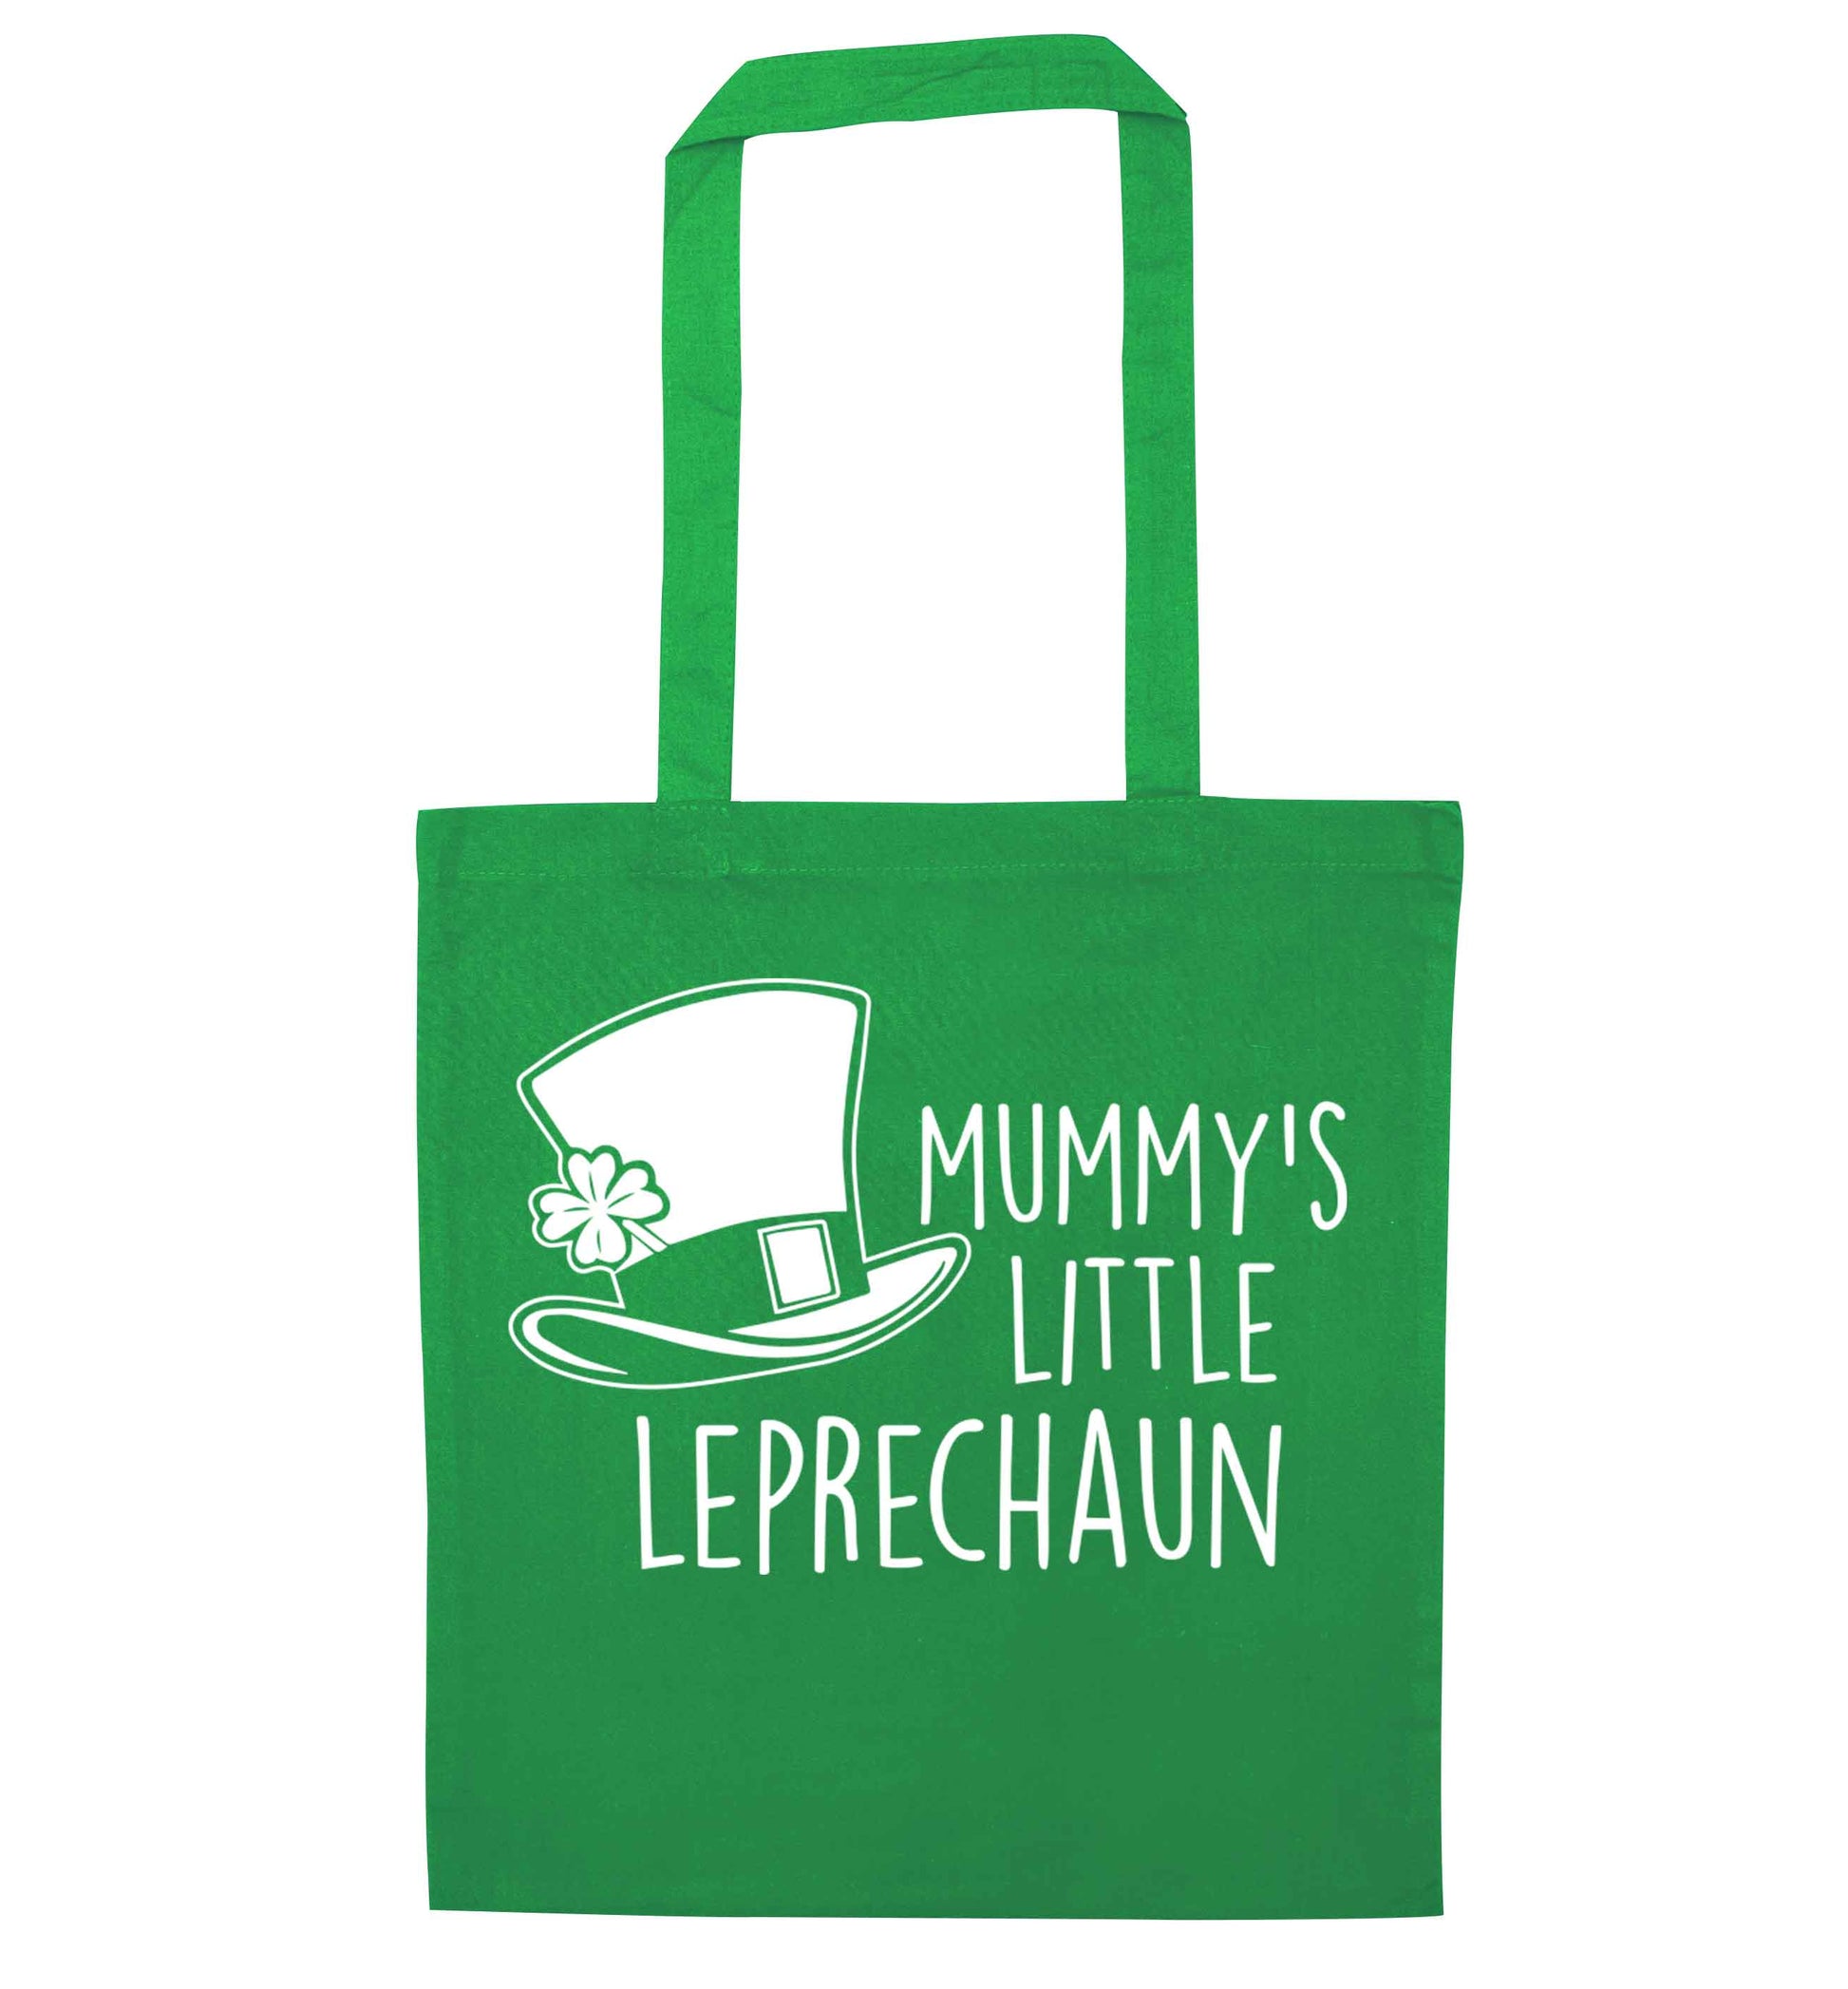 Mummy's little leprechaun green tote bag